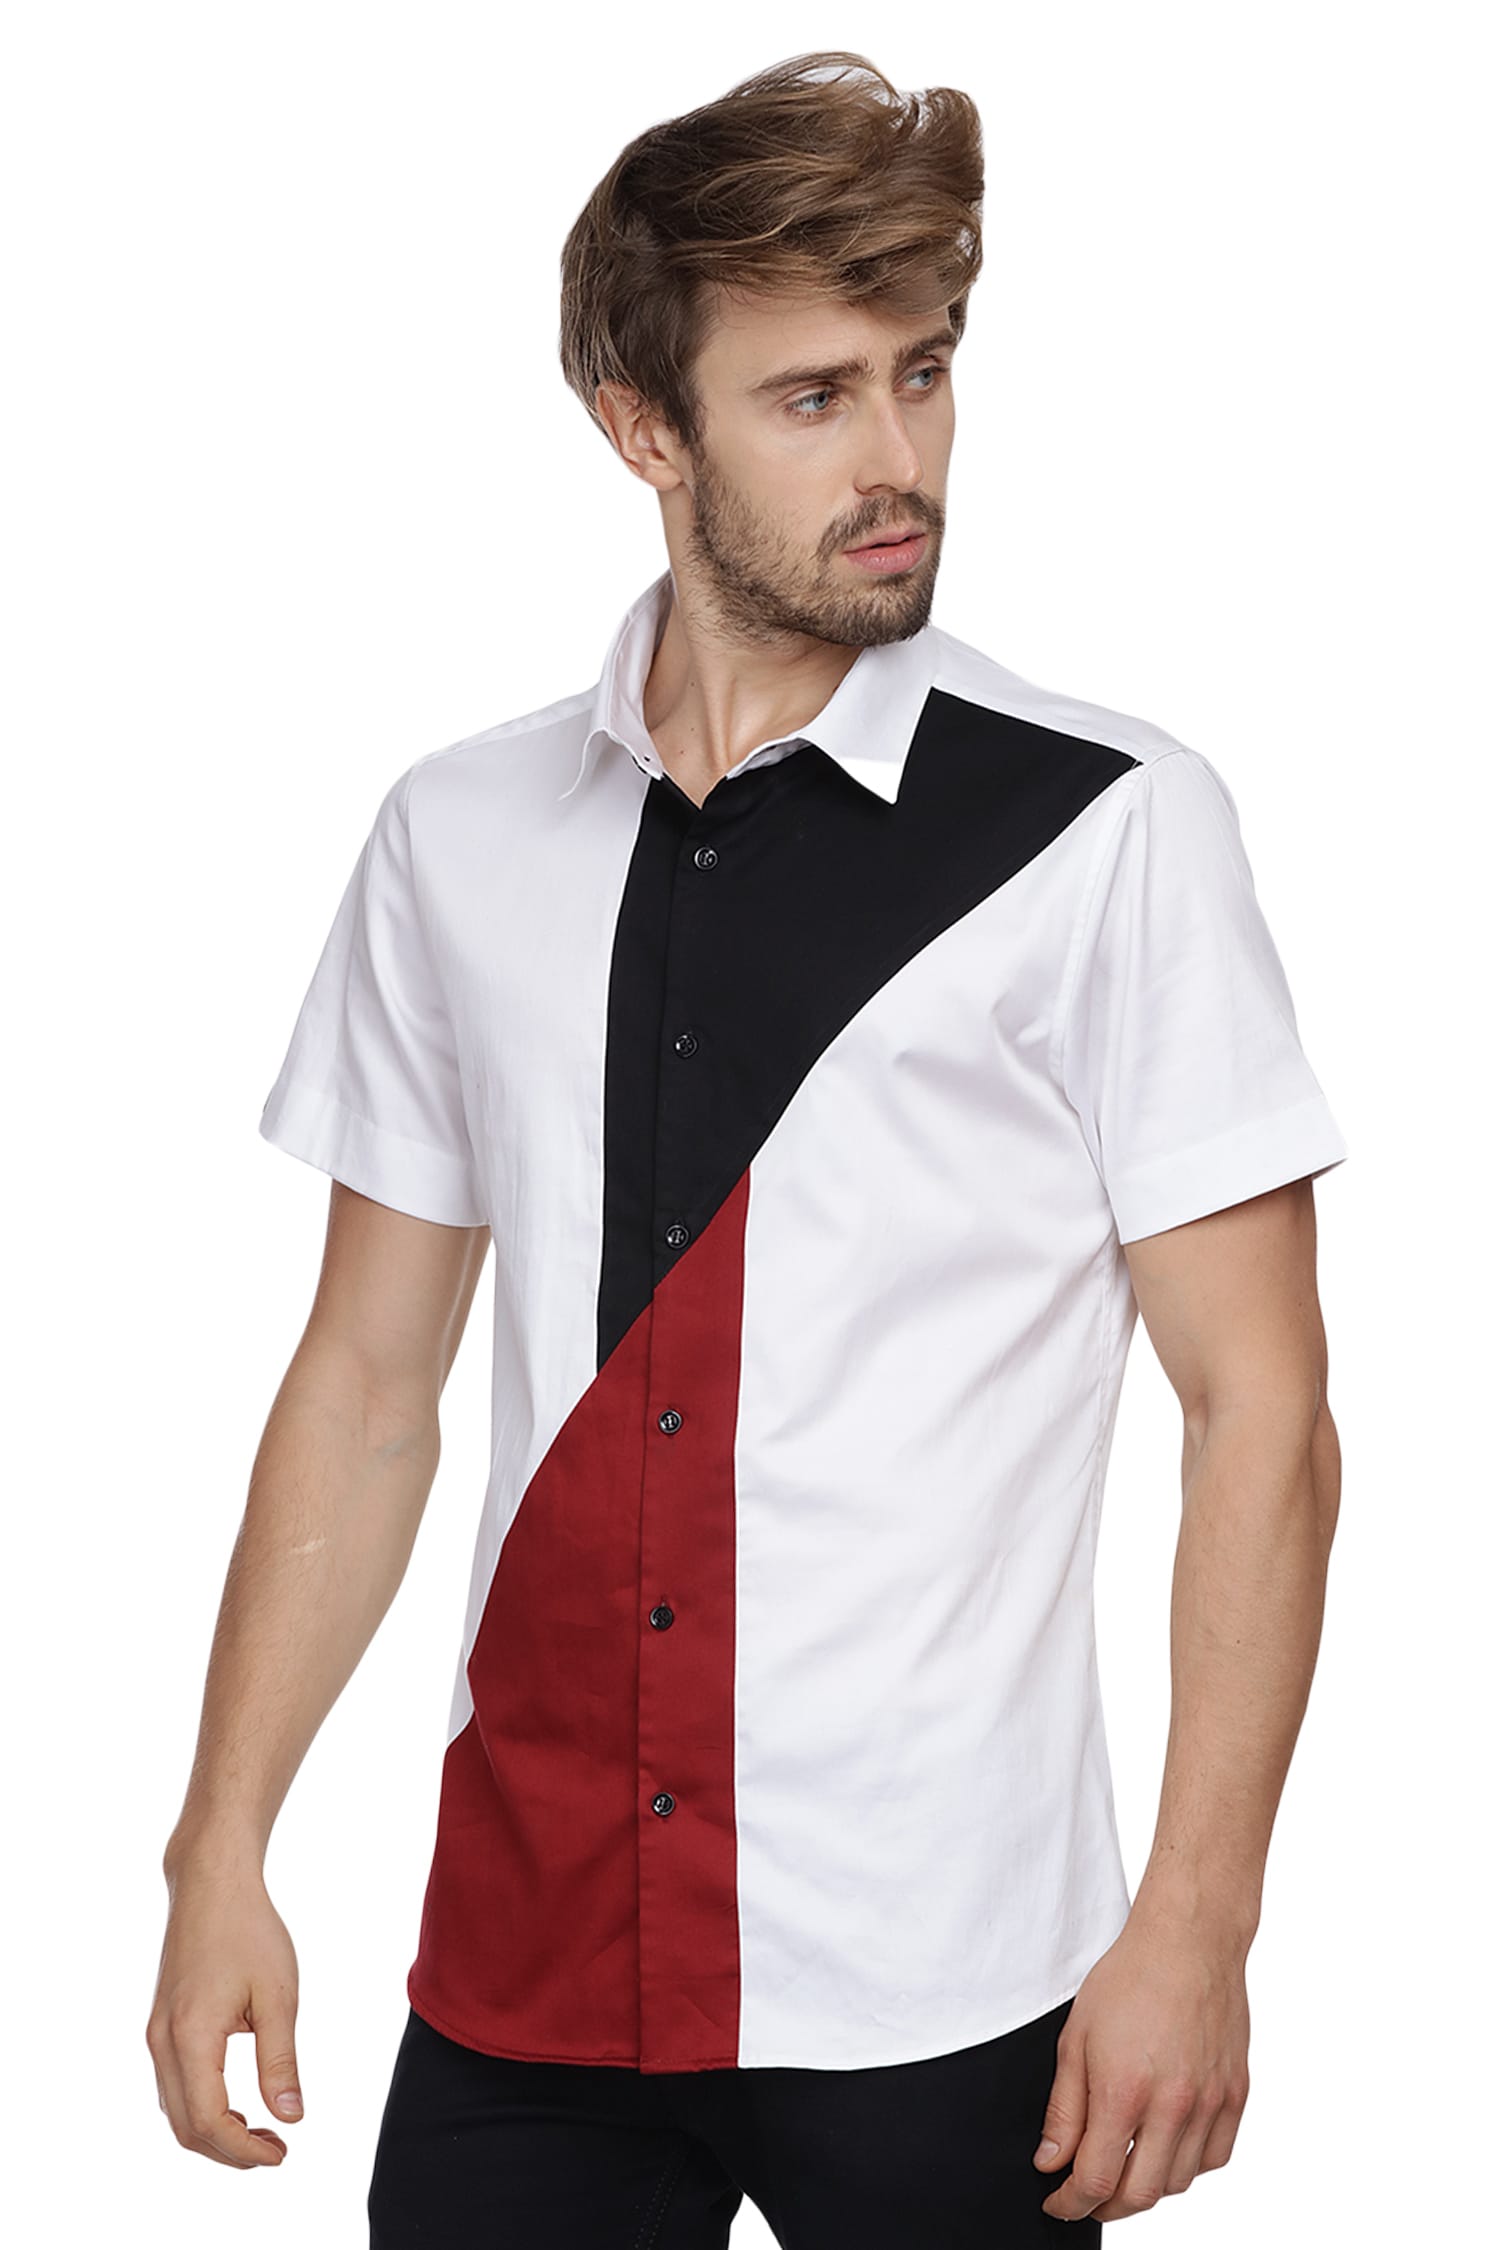 Abkasa Multi Color Cotton Slim-fit Colorblock Shirt For Men